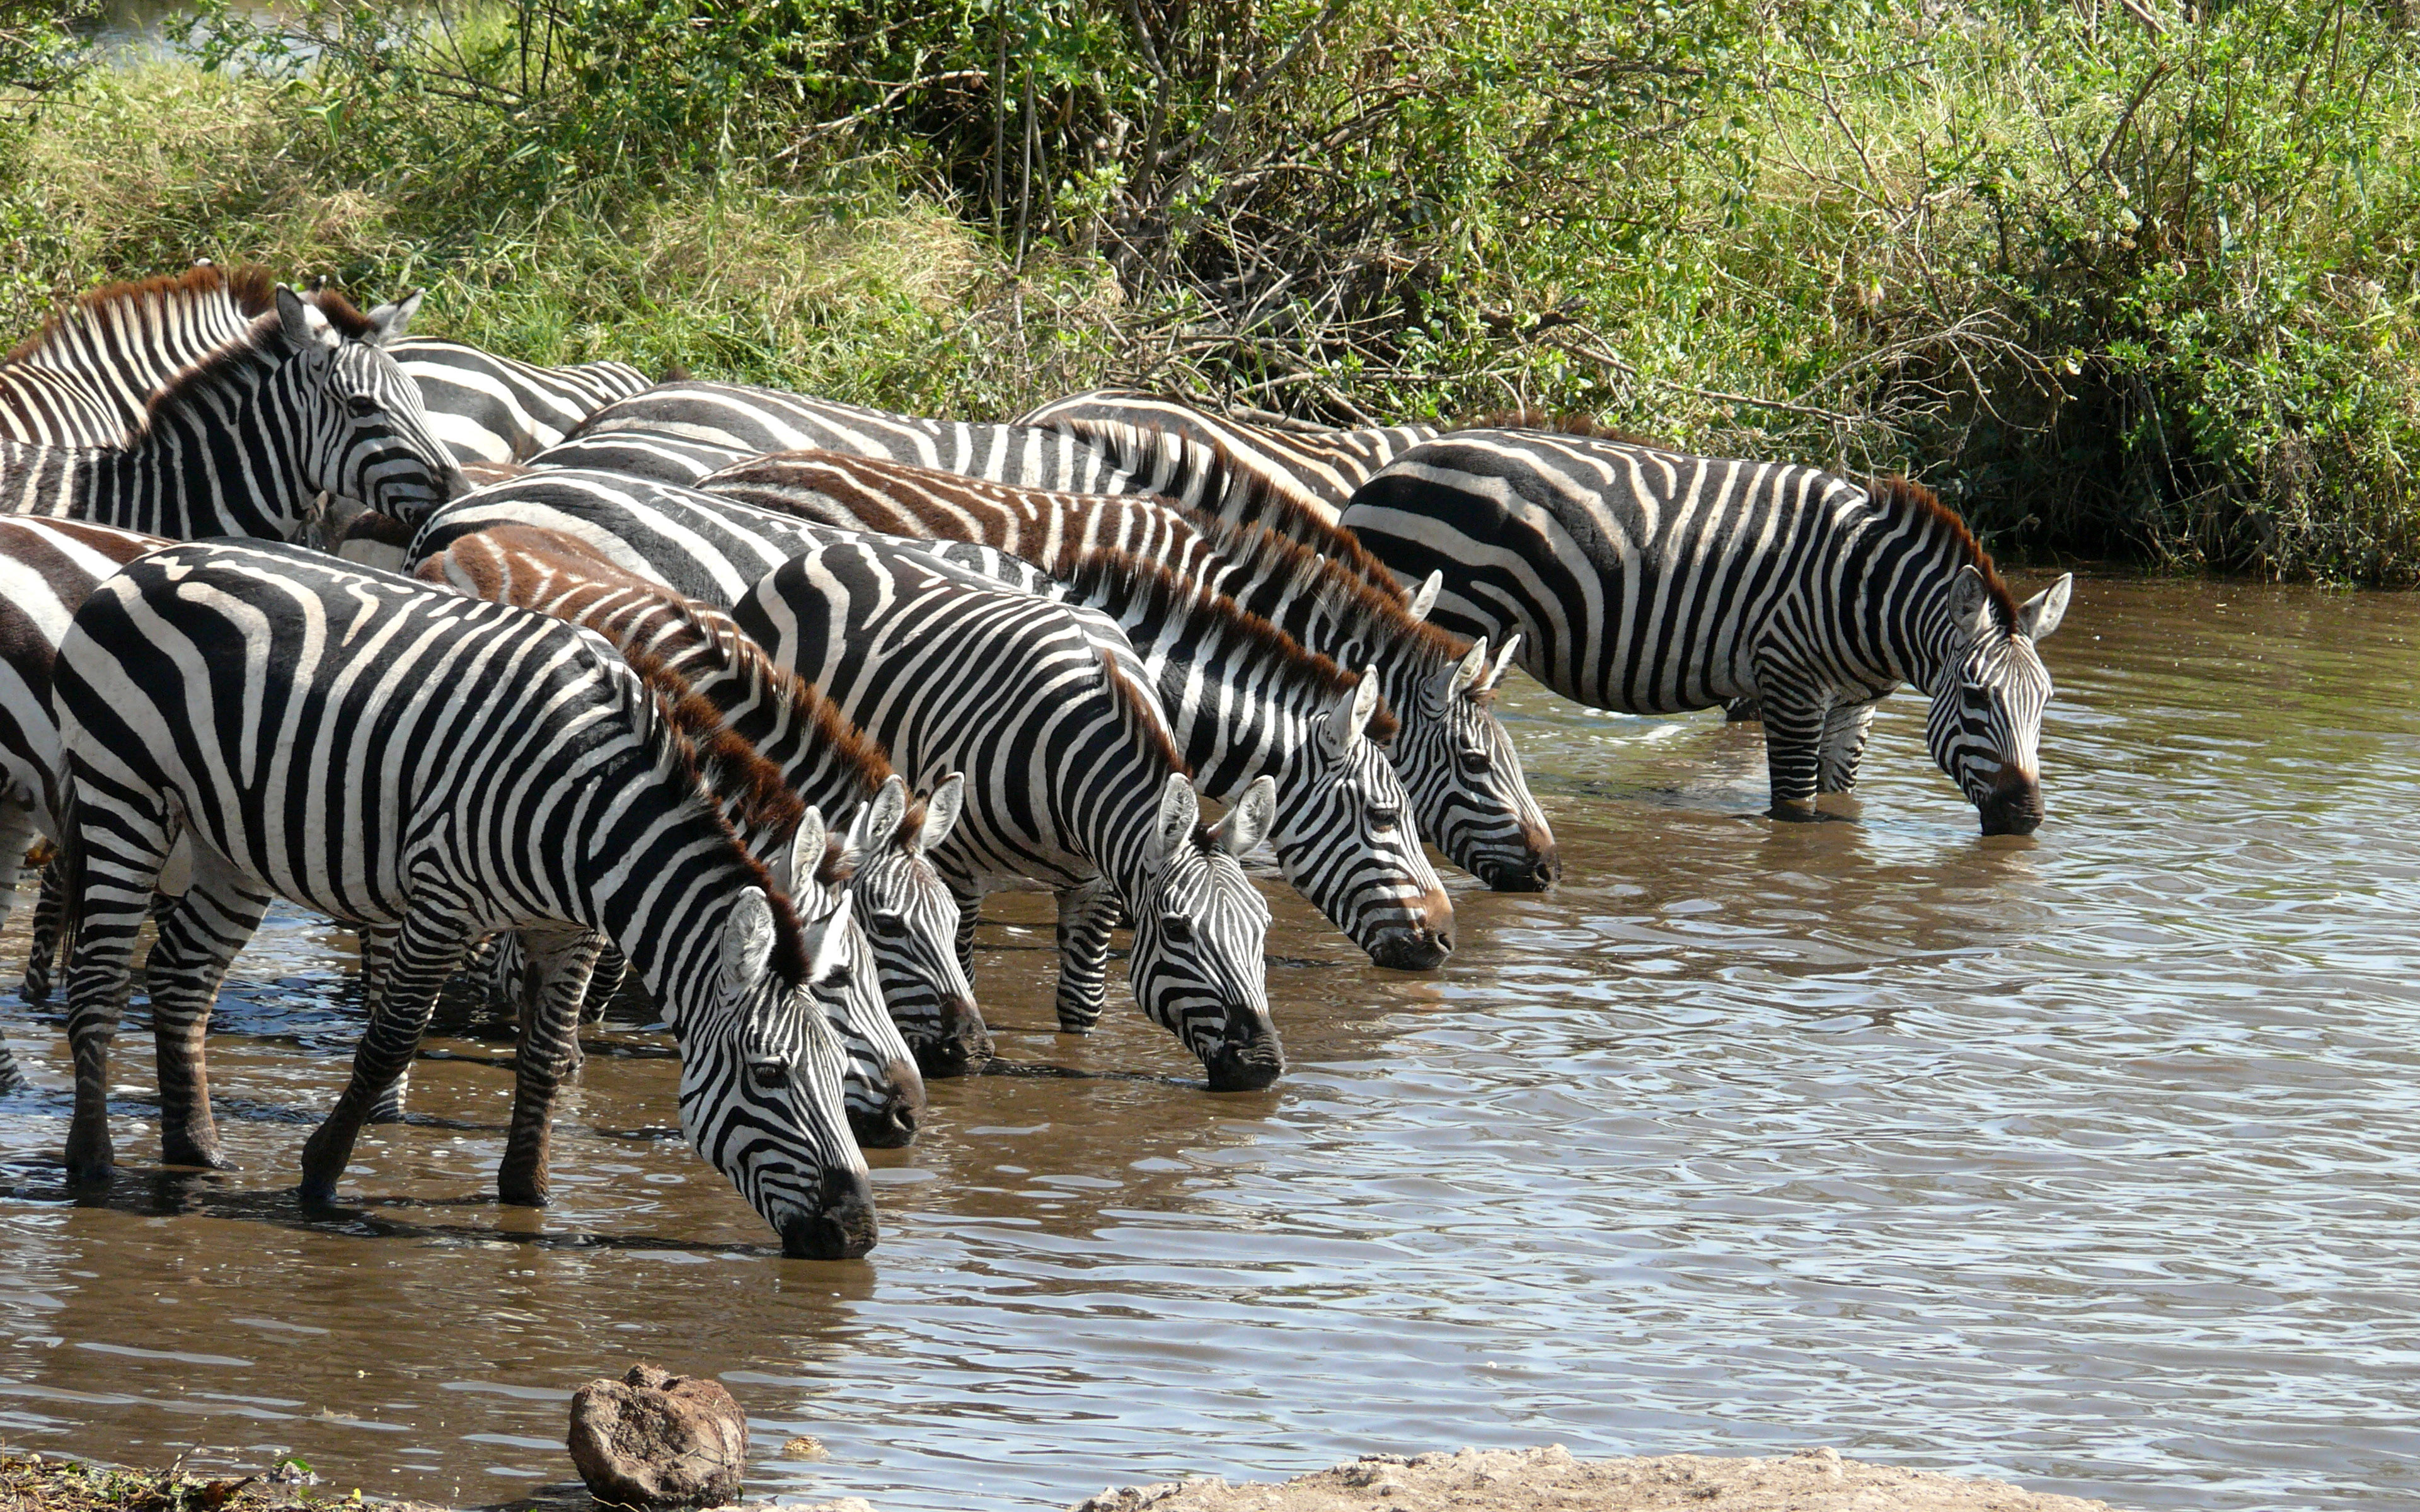 Zebras Drinking Water Wallpaper Hd : Wallpapers13.com